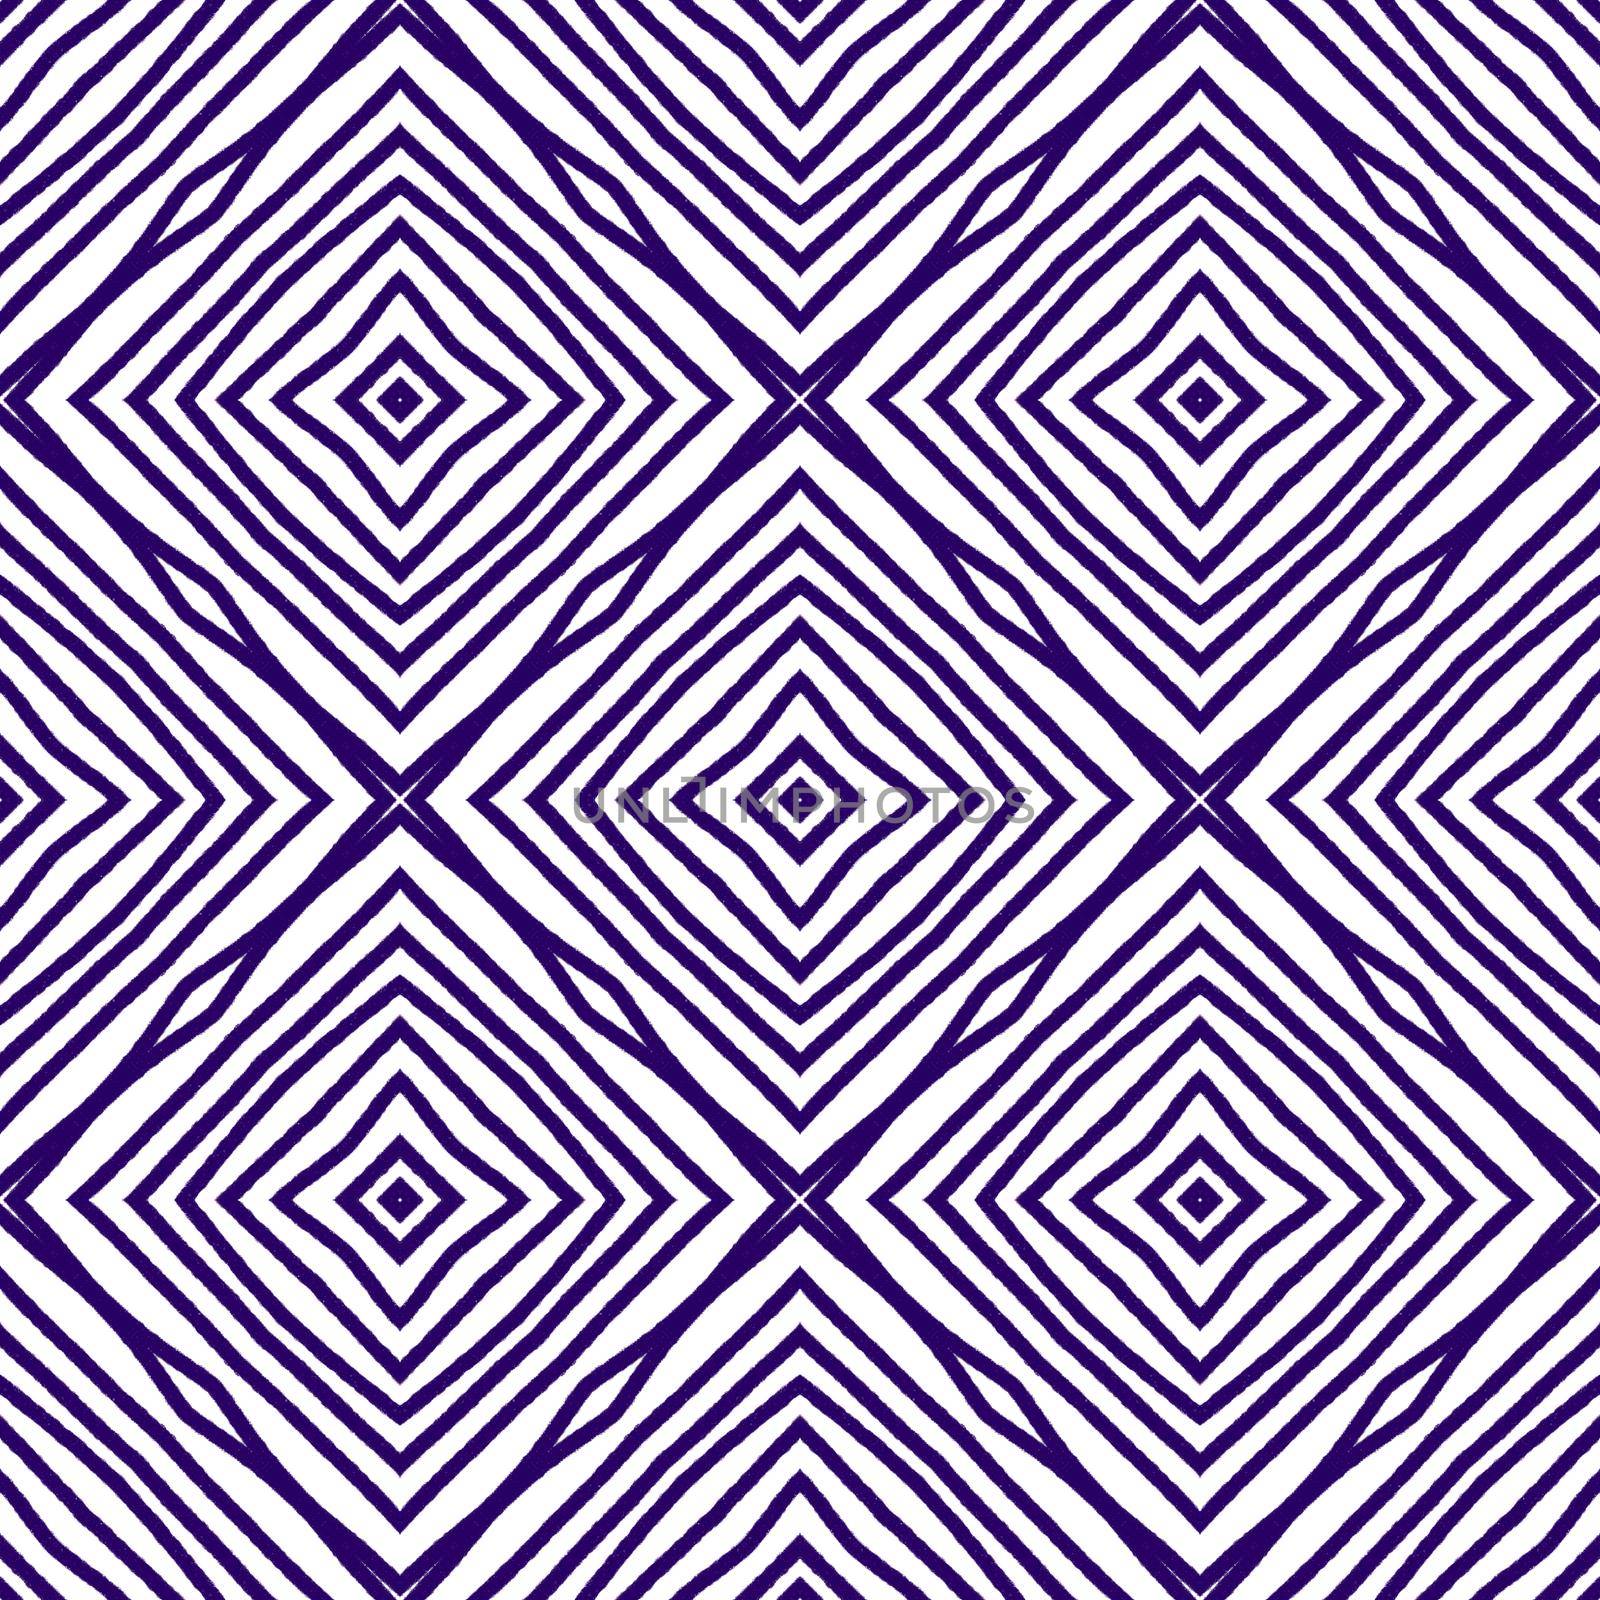 Arabesque hand drawn pattern. Purple symmetrical by beginagain